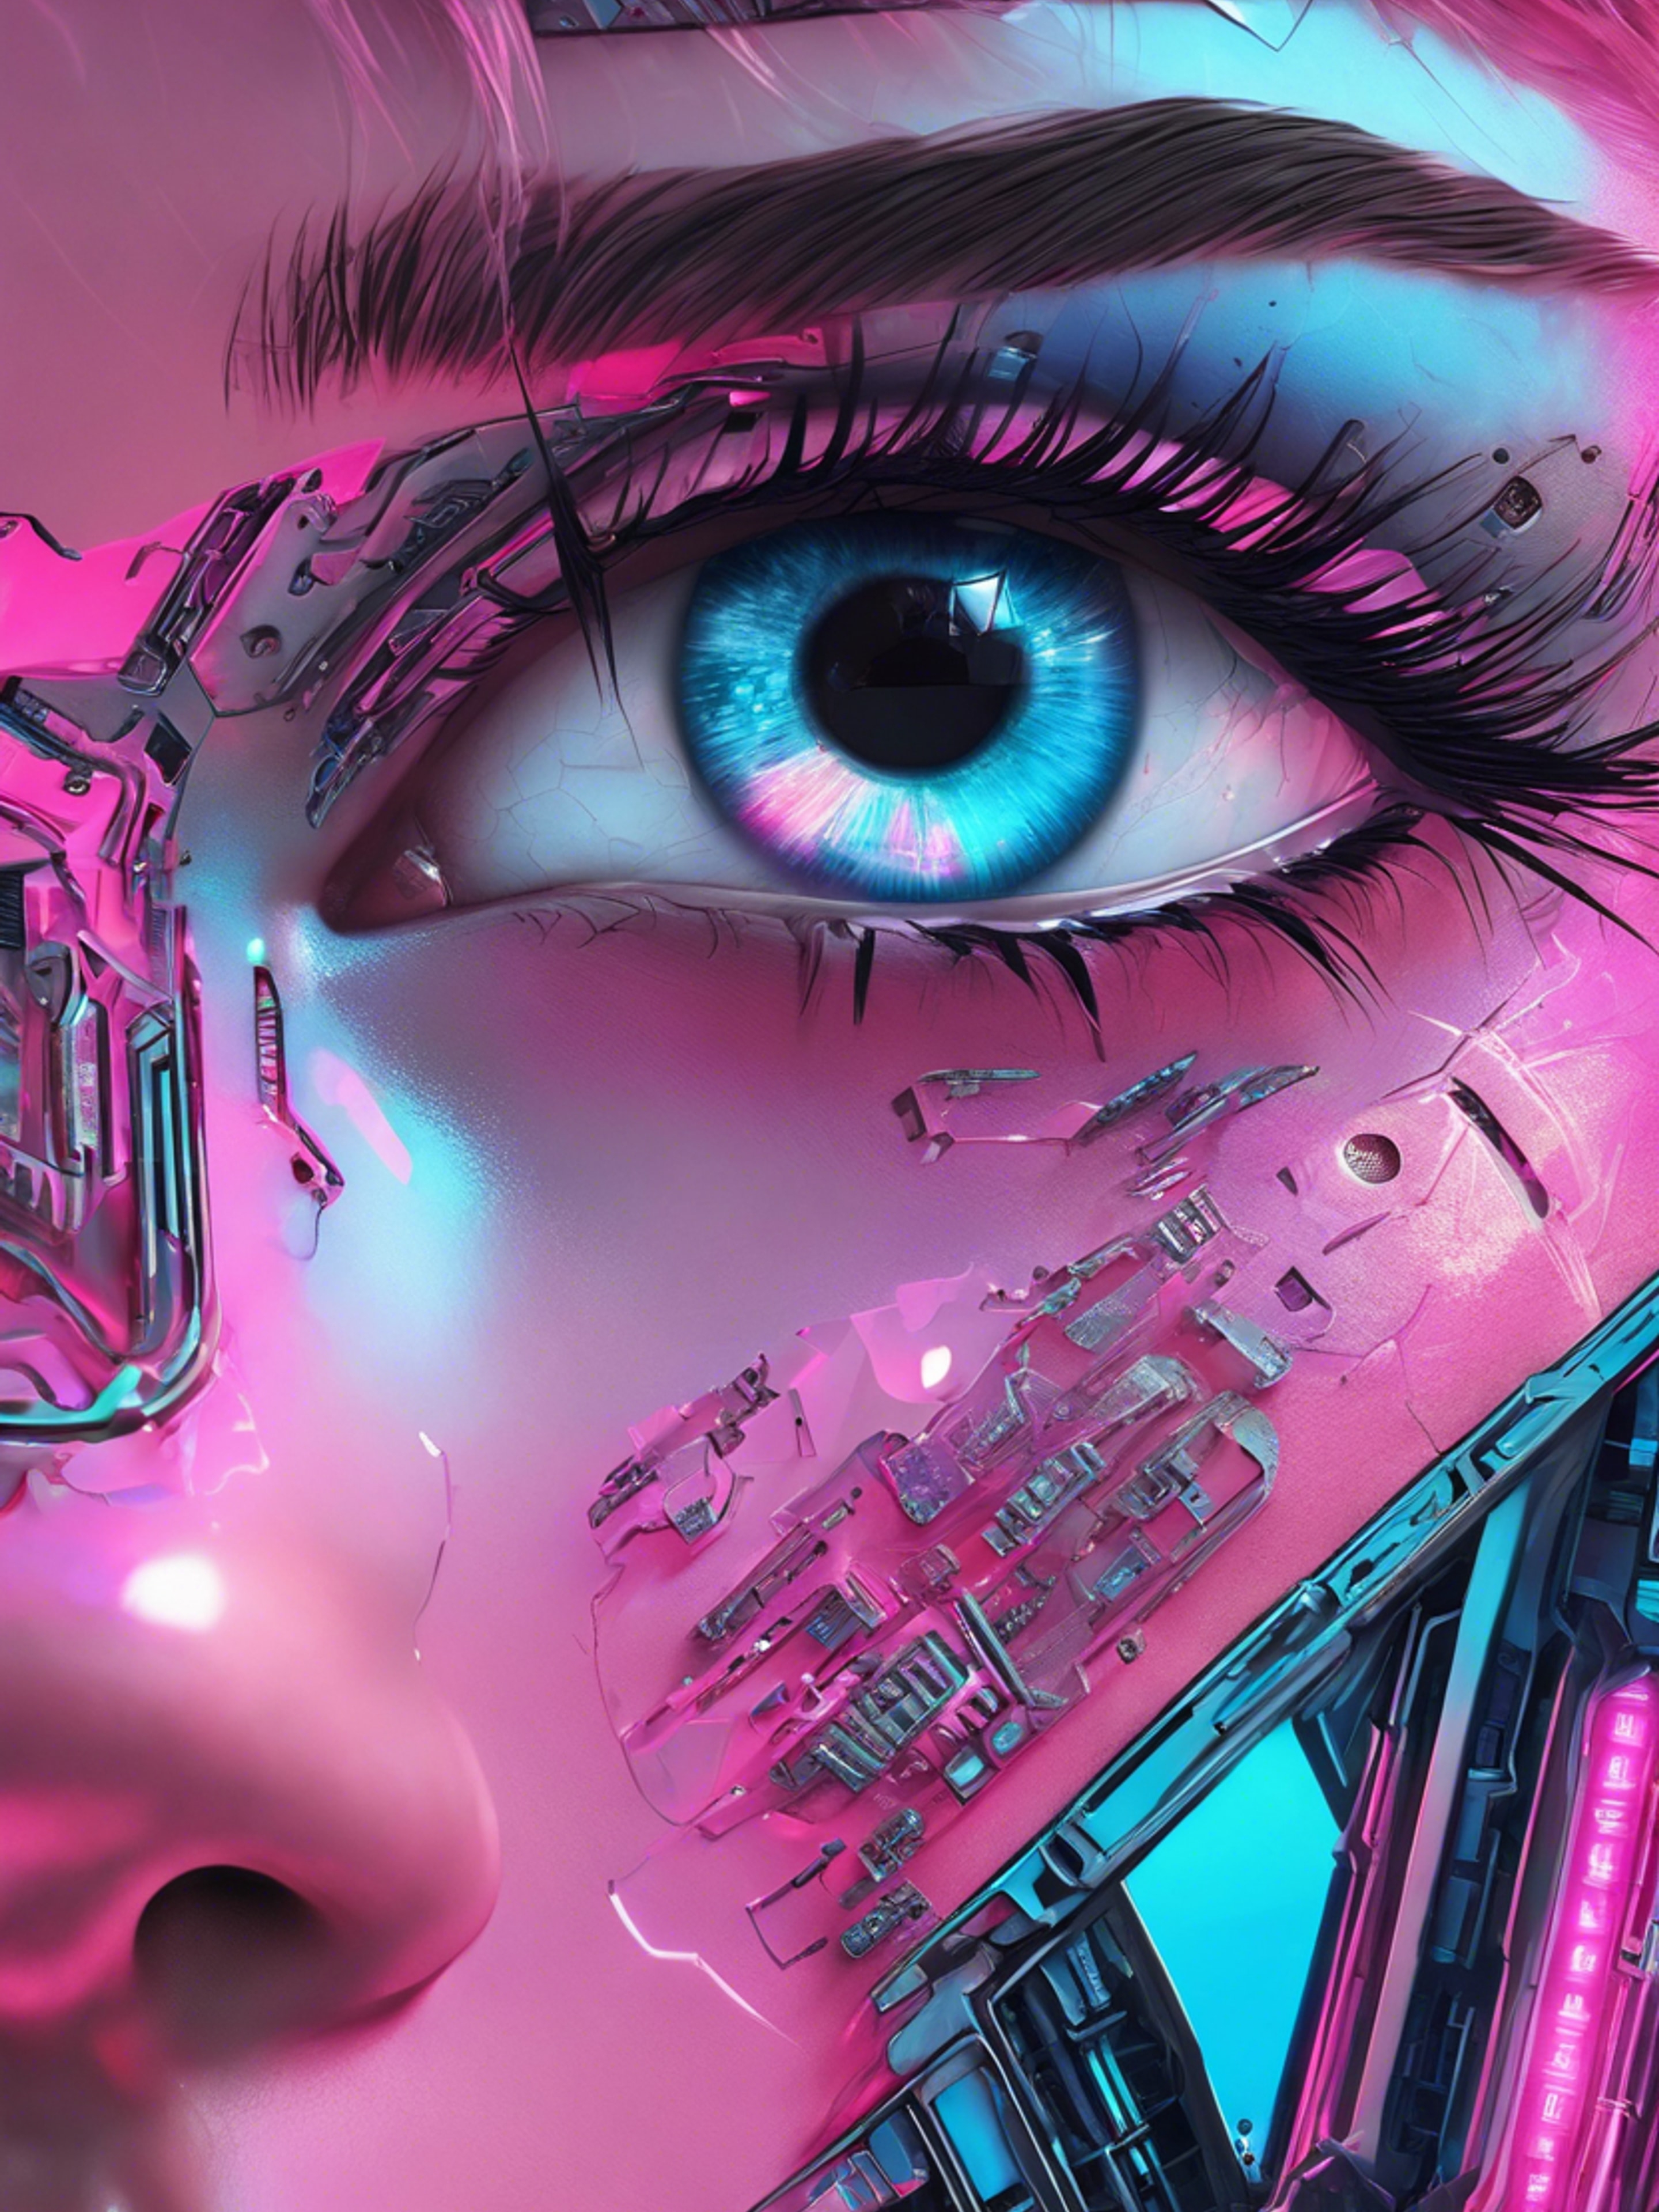 A close-up of a cyberpunk girl's eye, reflecting pink and blue city lights. ورق الجدران[805009a14d1a4c10afac]